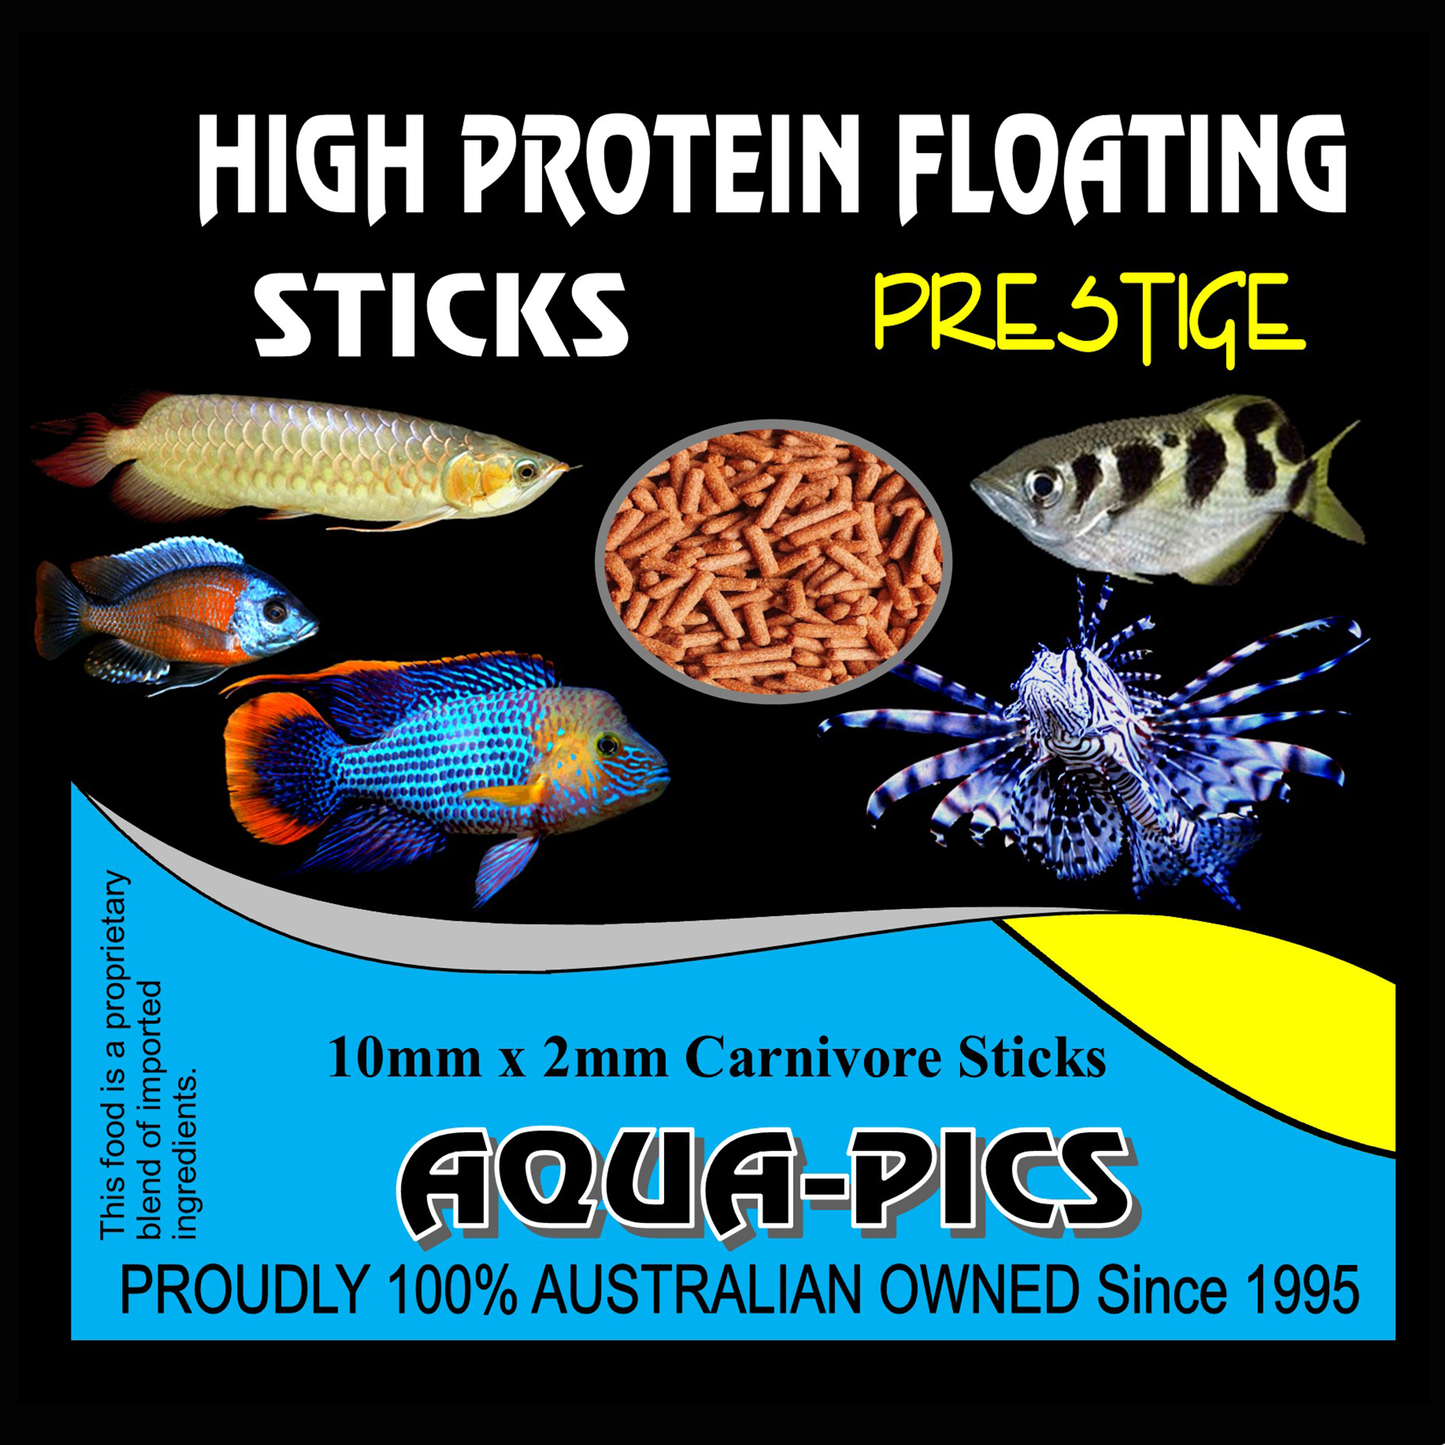 High Protein Floating Sticks 800g